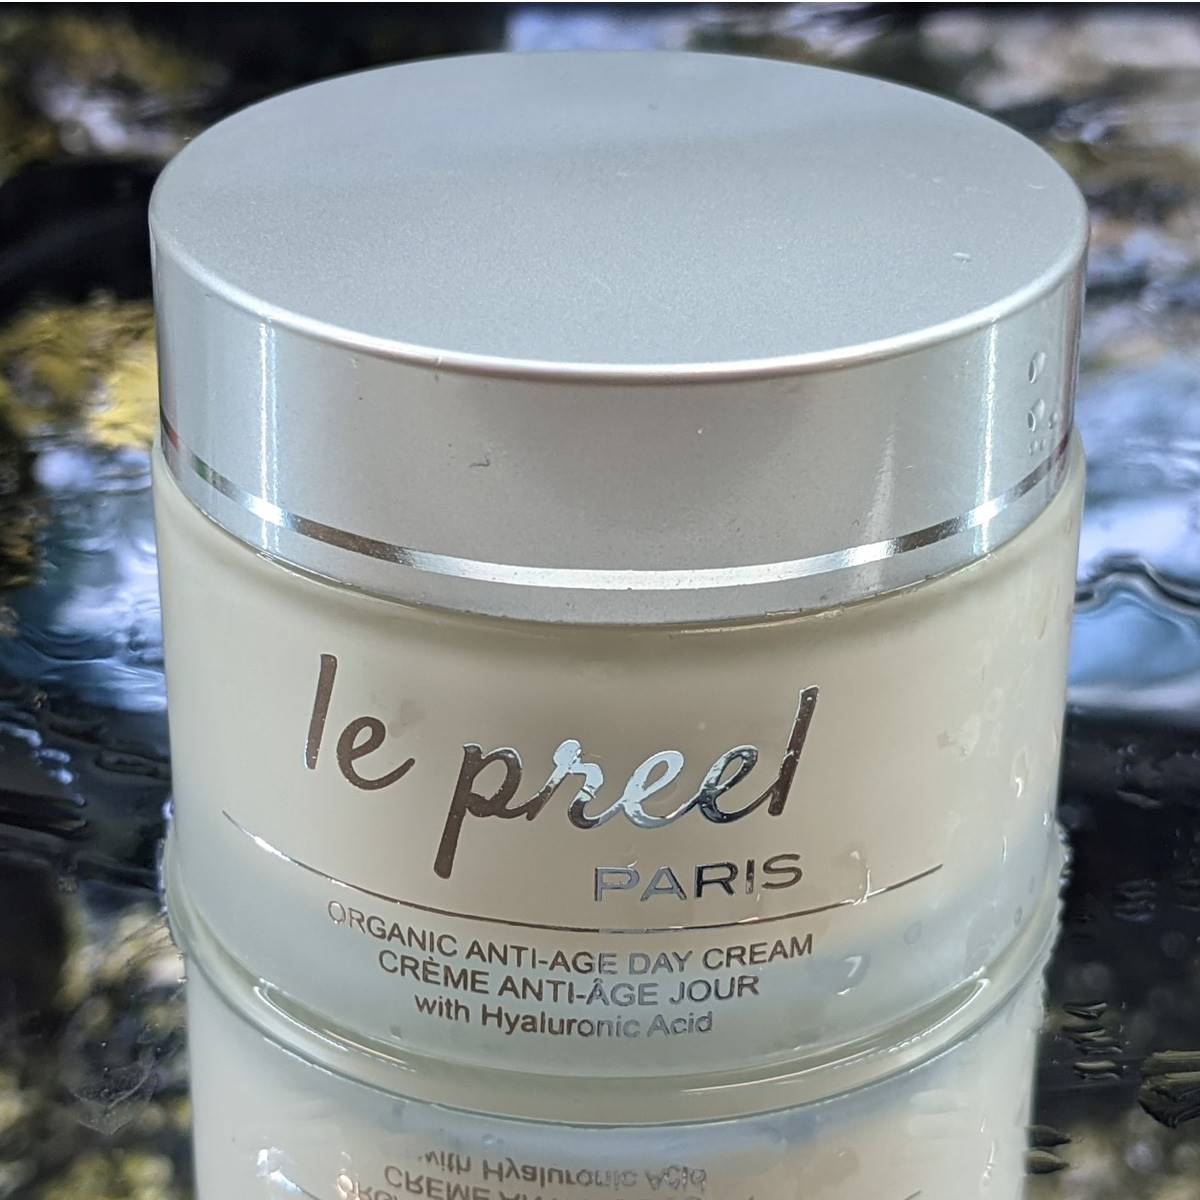 Le Preel Paris Organic Anti-Aging Day Time Cream